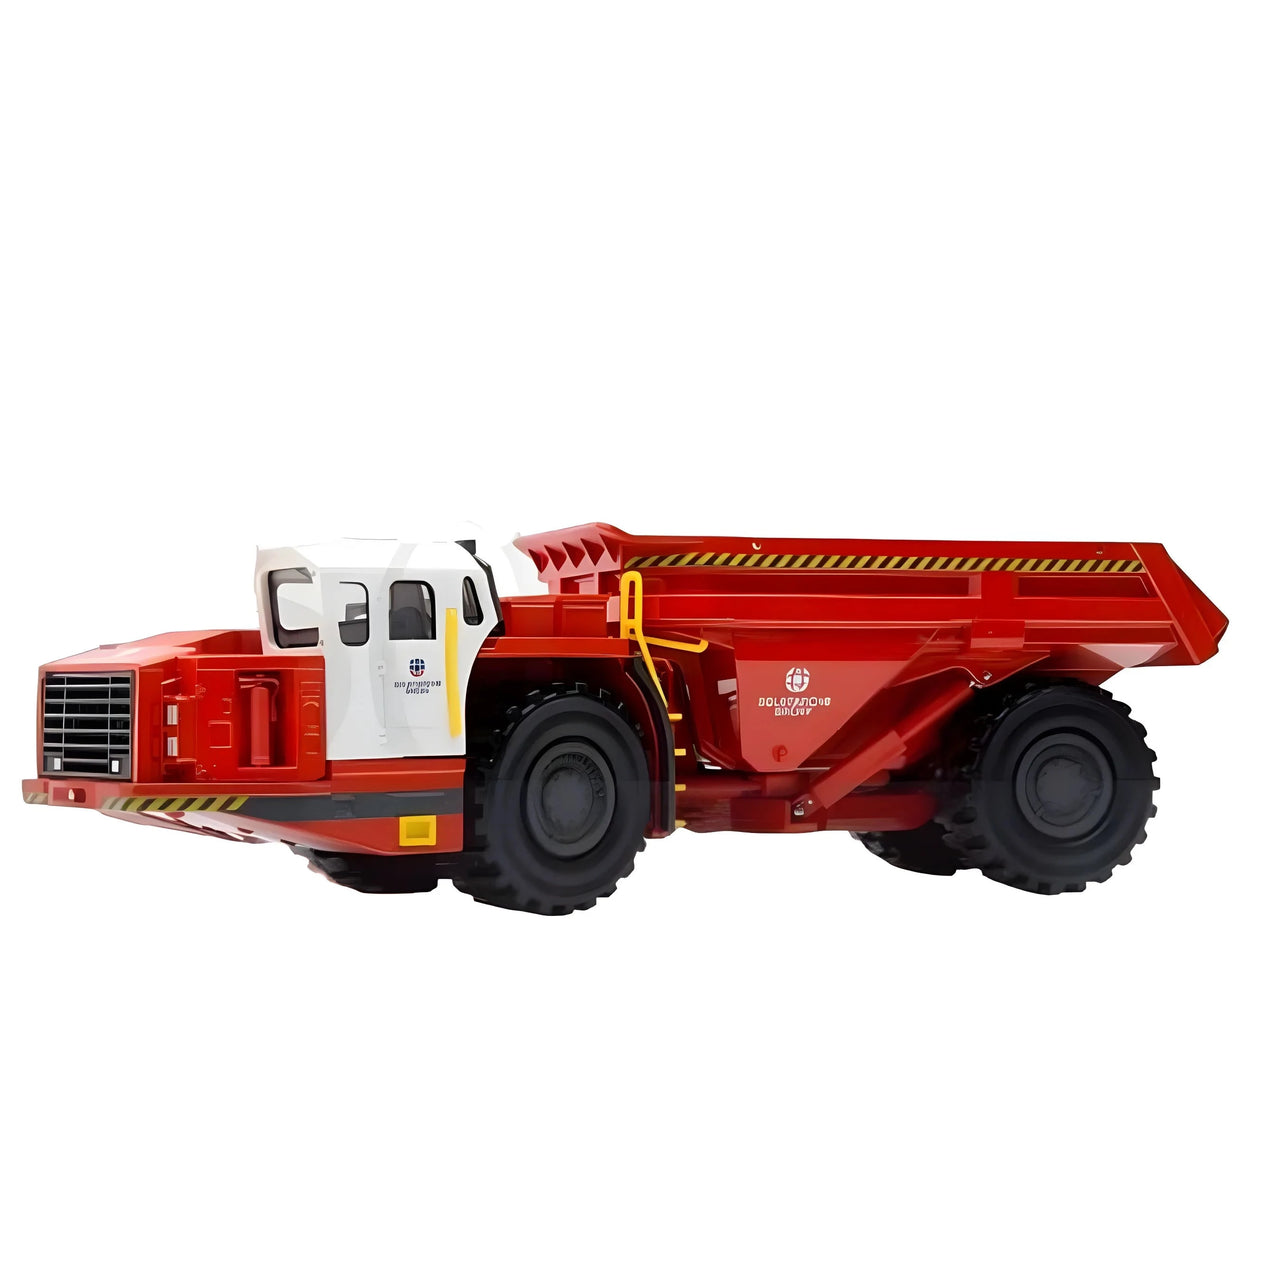 2729-04 Sandvik TH550 Low Profile Mining Truck 1:50 Scale